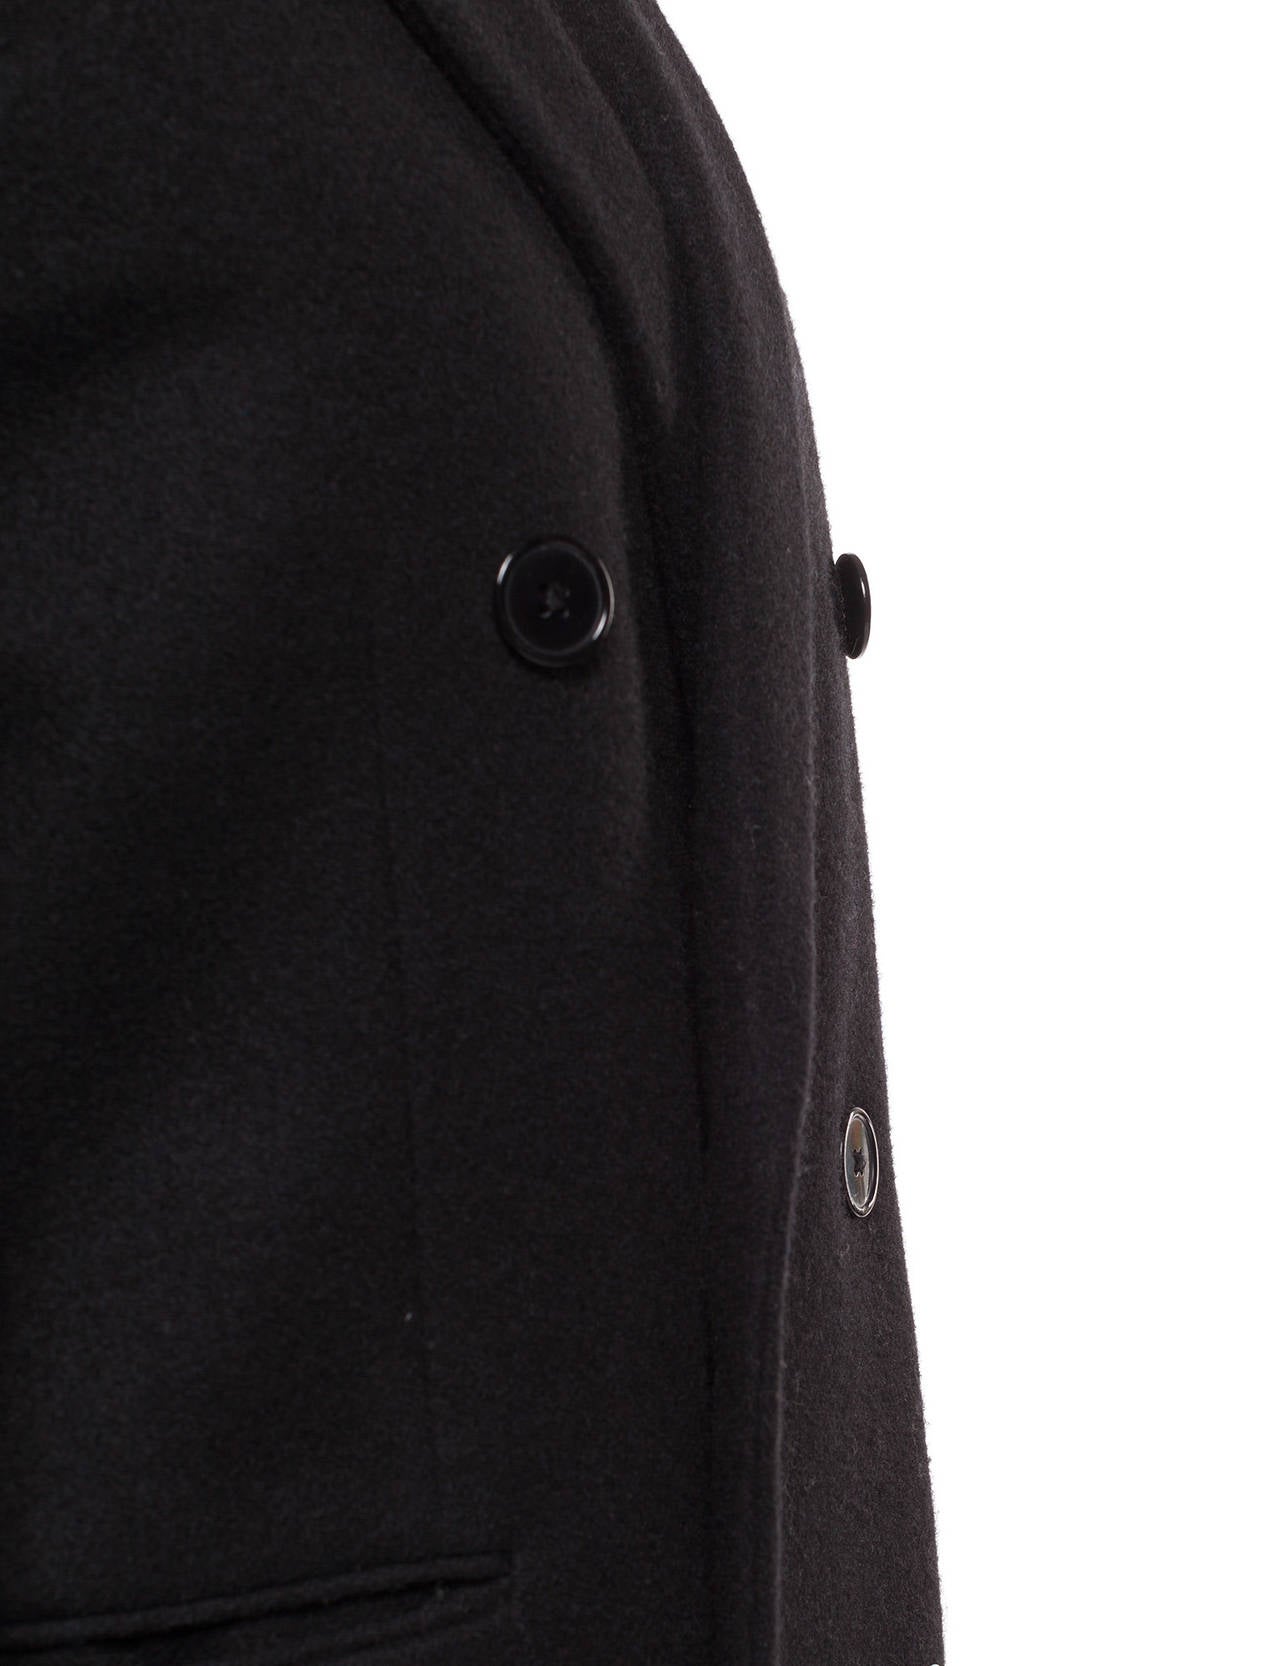 Saint Laurent by Hedi Slimane Wool tuxedo coat, Sz. XS 1